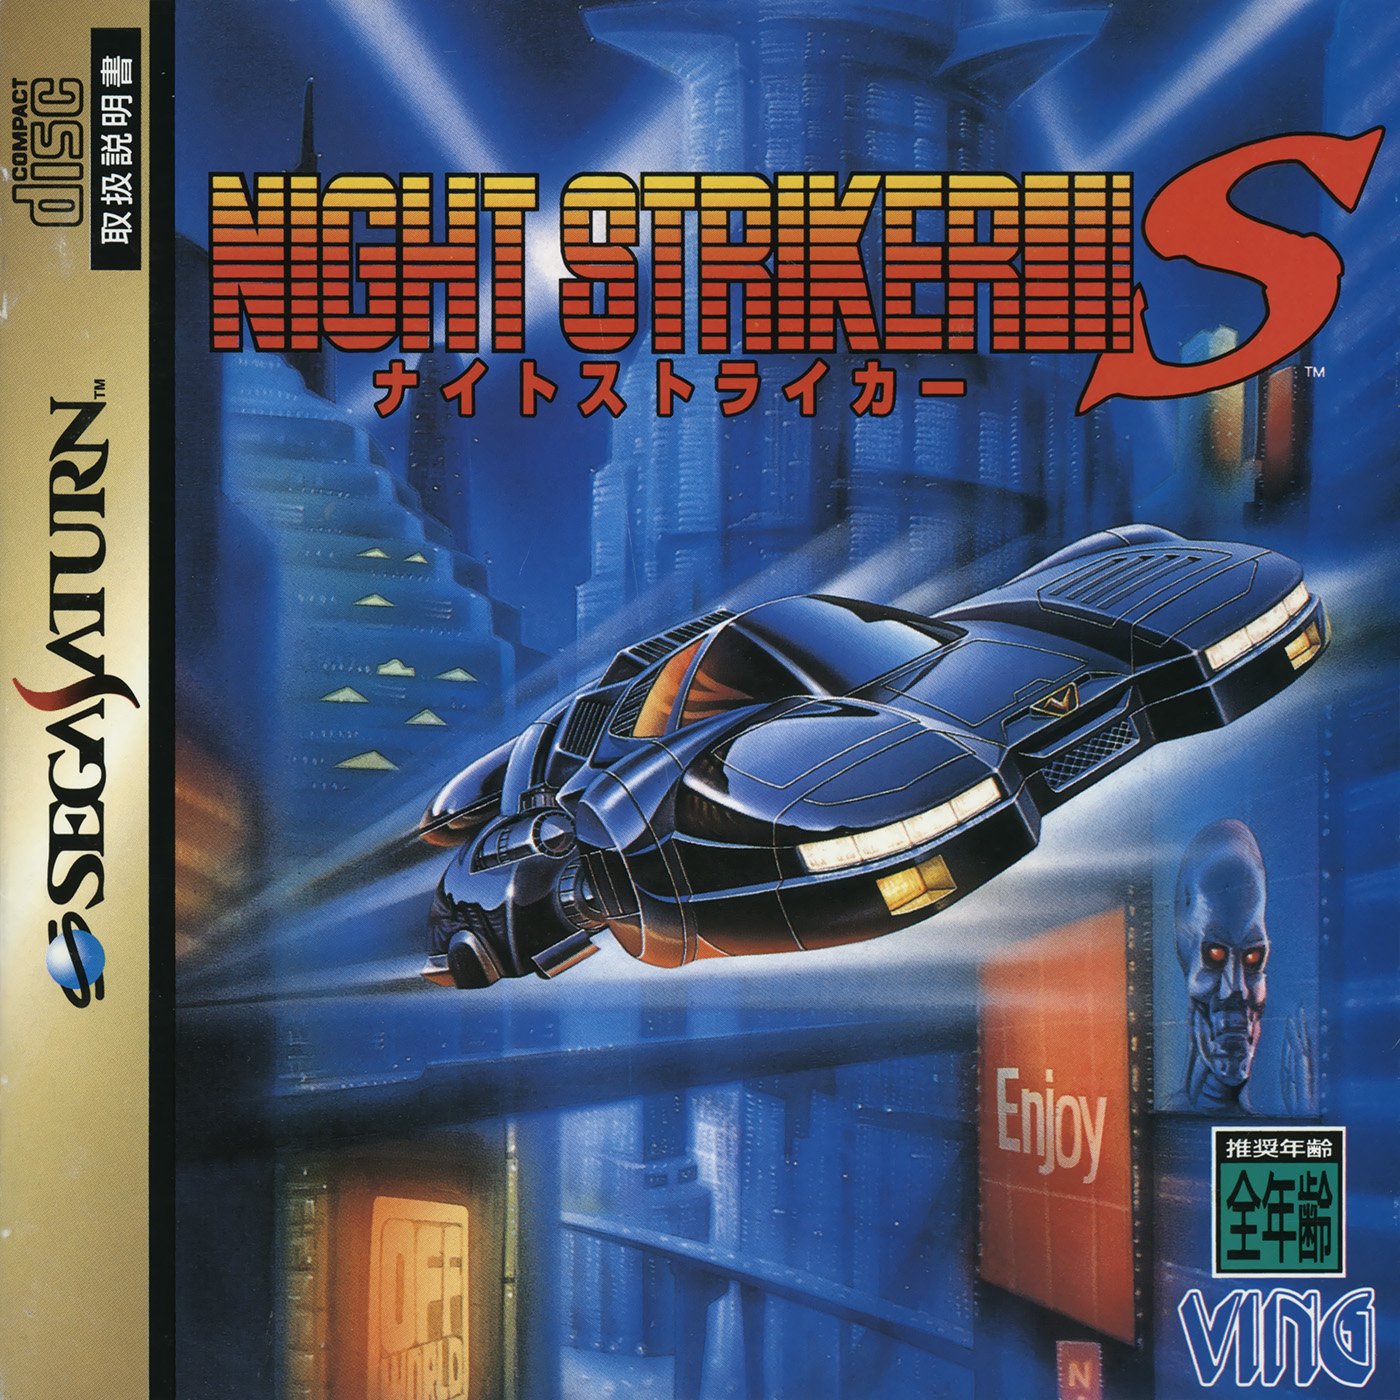 Night Striker S